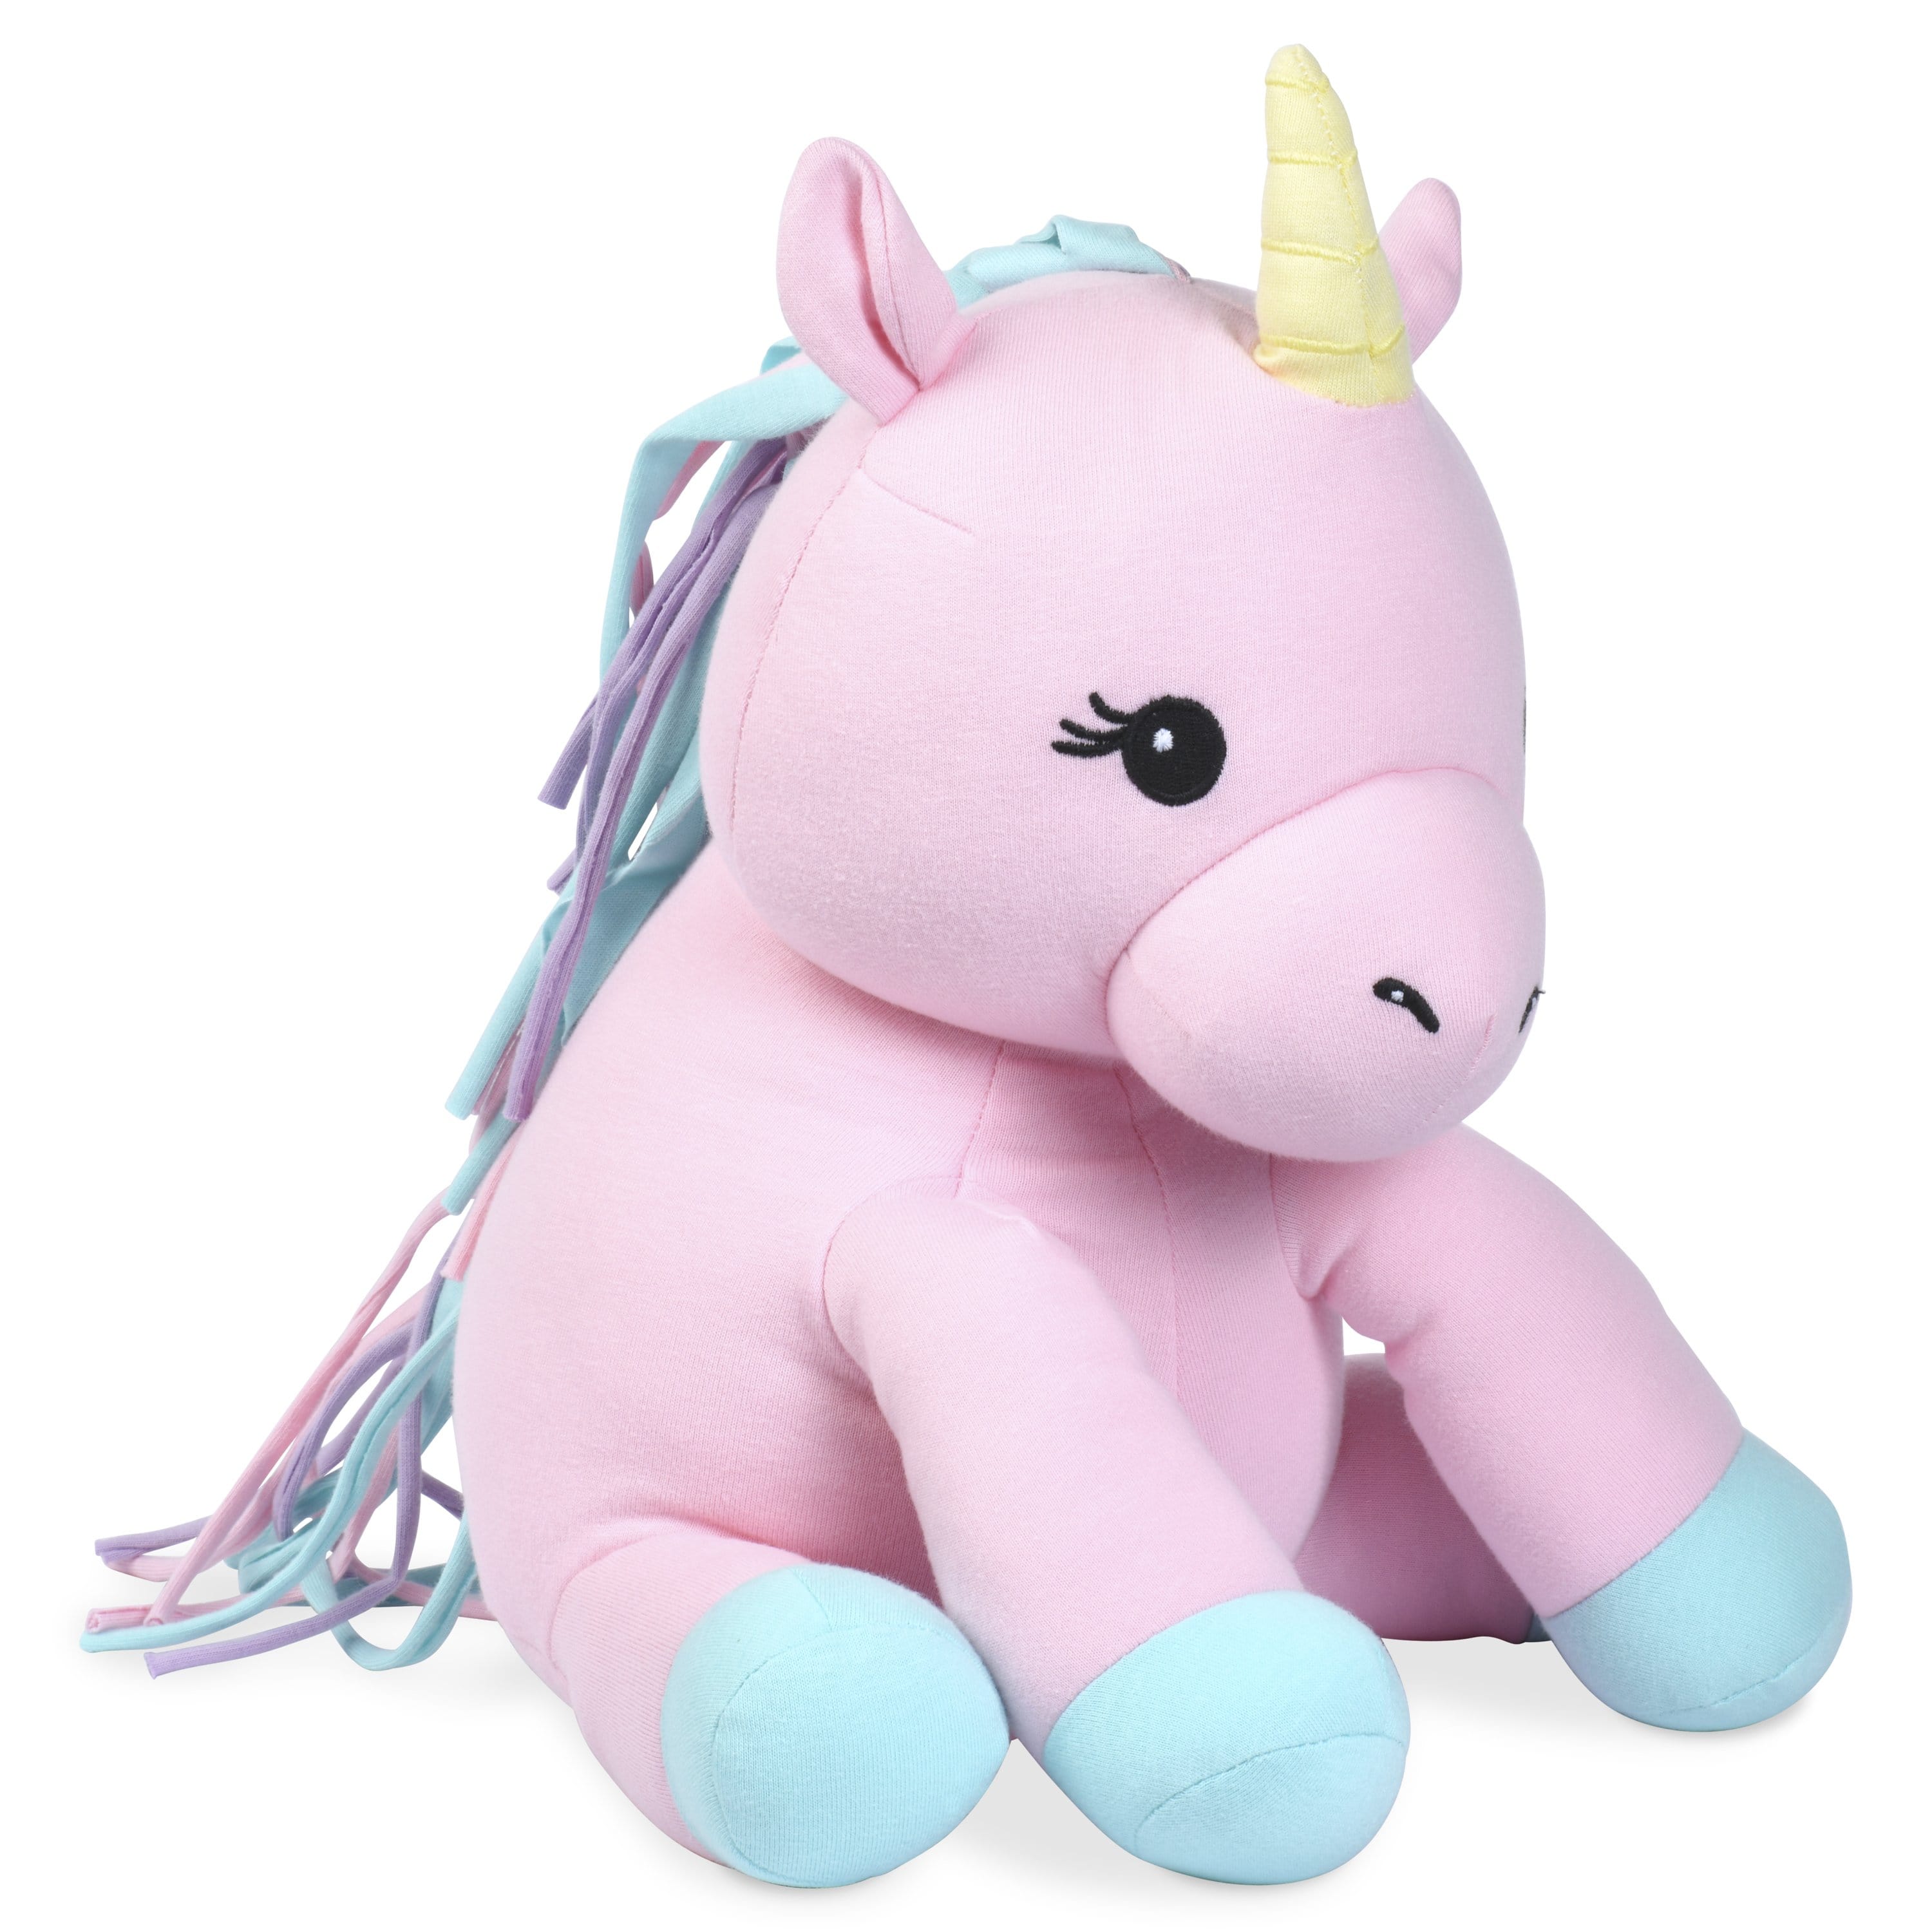 rainbow unicorn stuffed animal